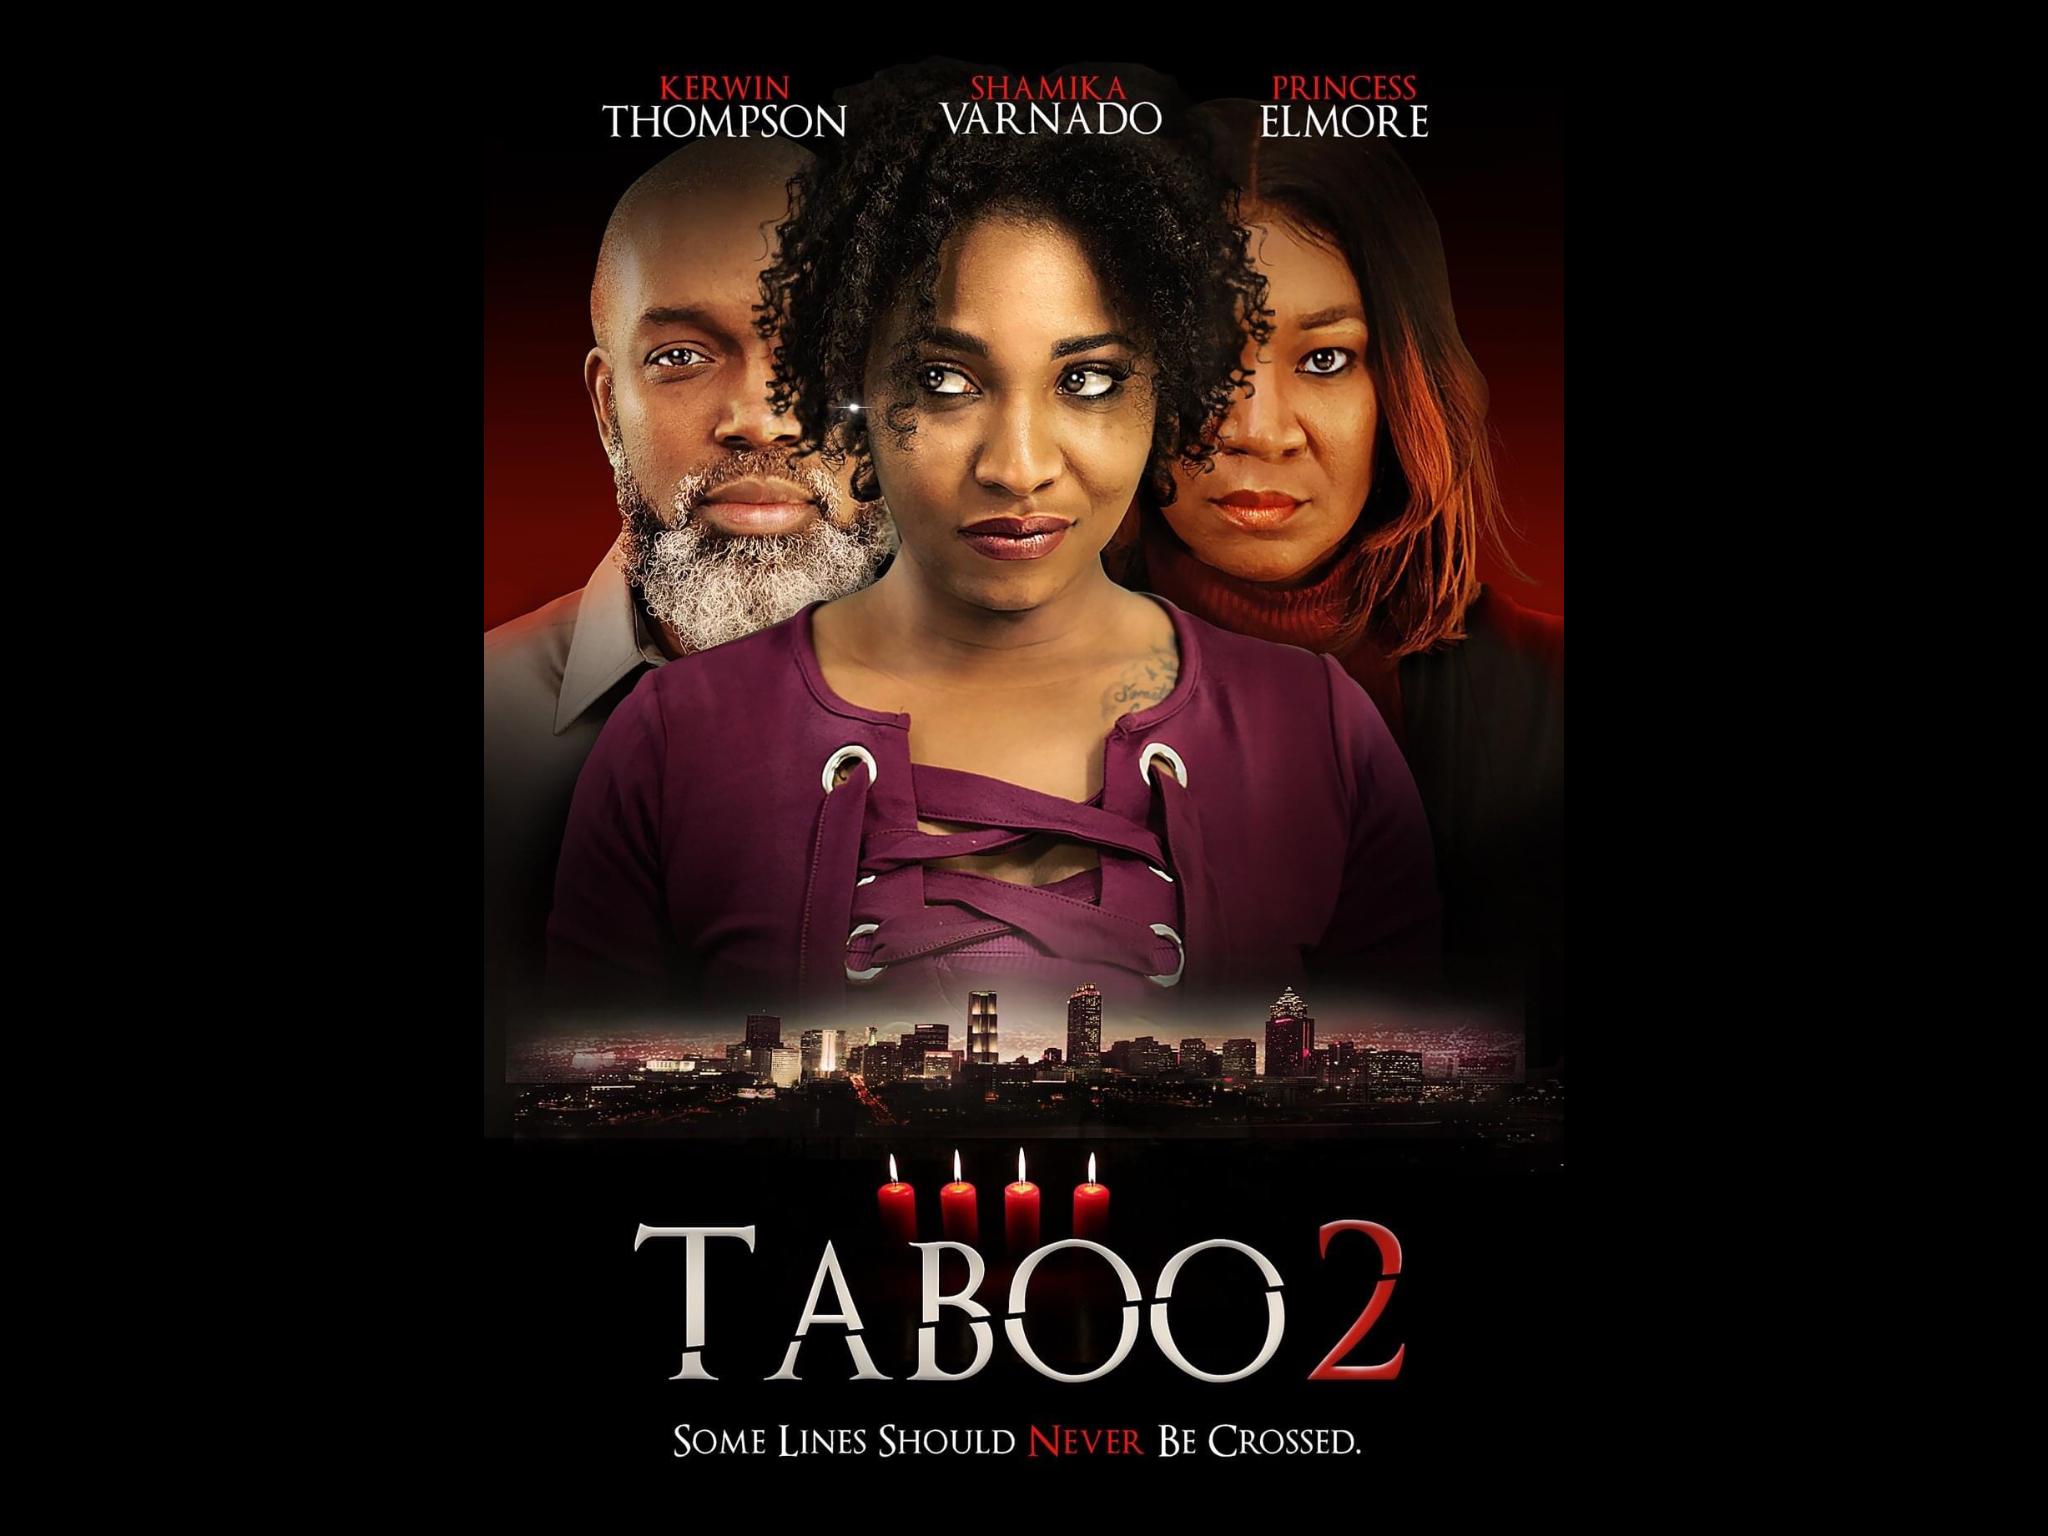 aidil abd rahman recommends Taboo Part 2 Movie